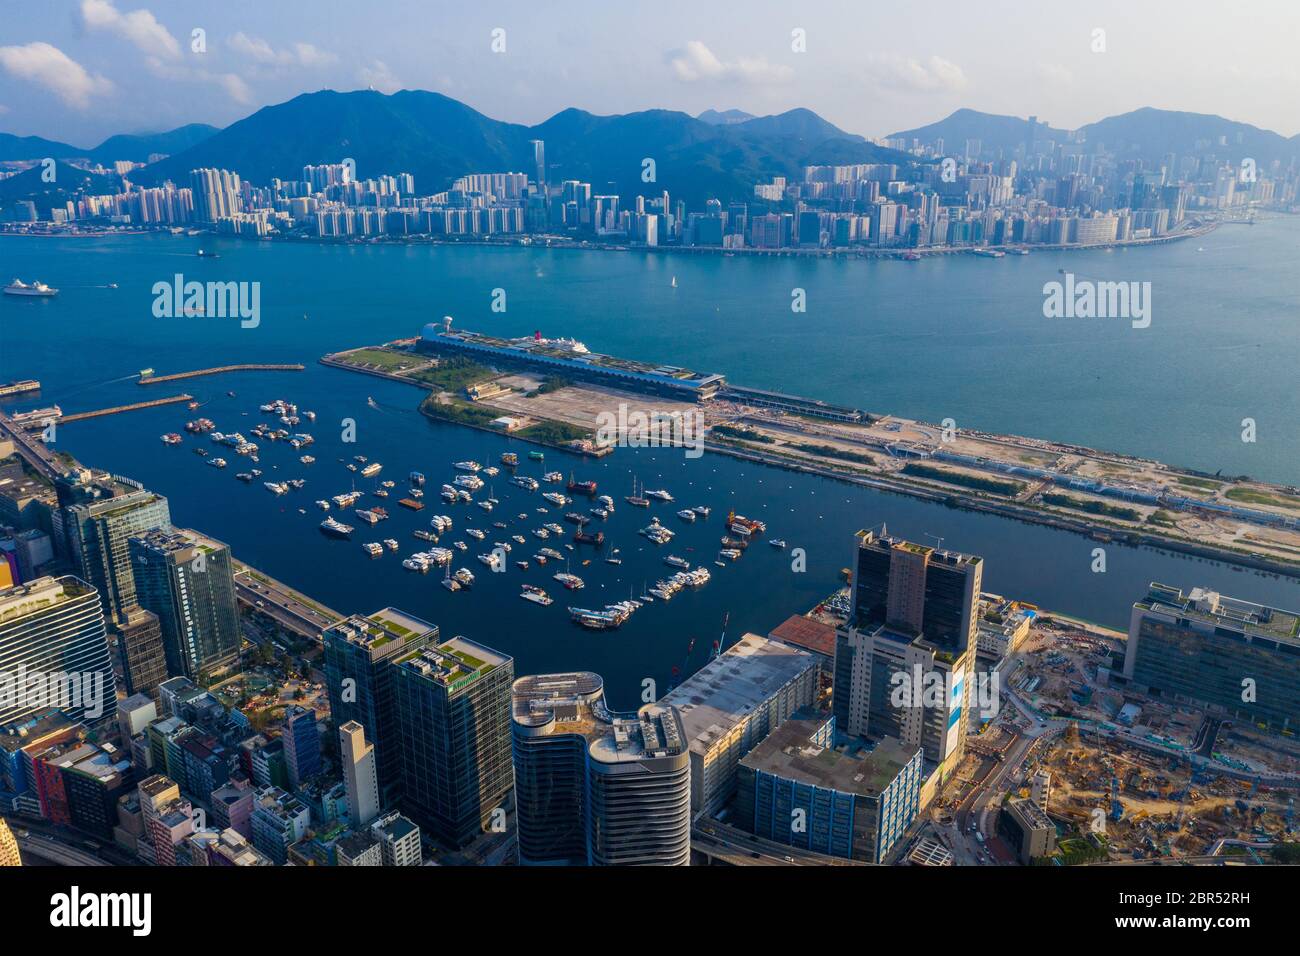 Kai Tak, Hong Kong 25 Apirl 2019: Vue de dessus de la ville de Hong Kong Banque D'Images